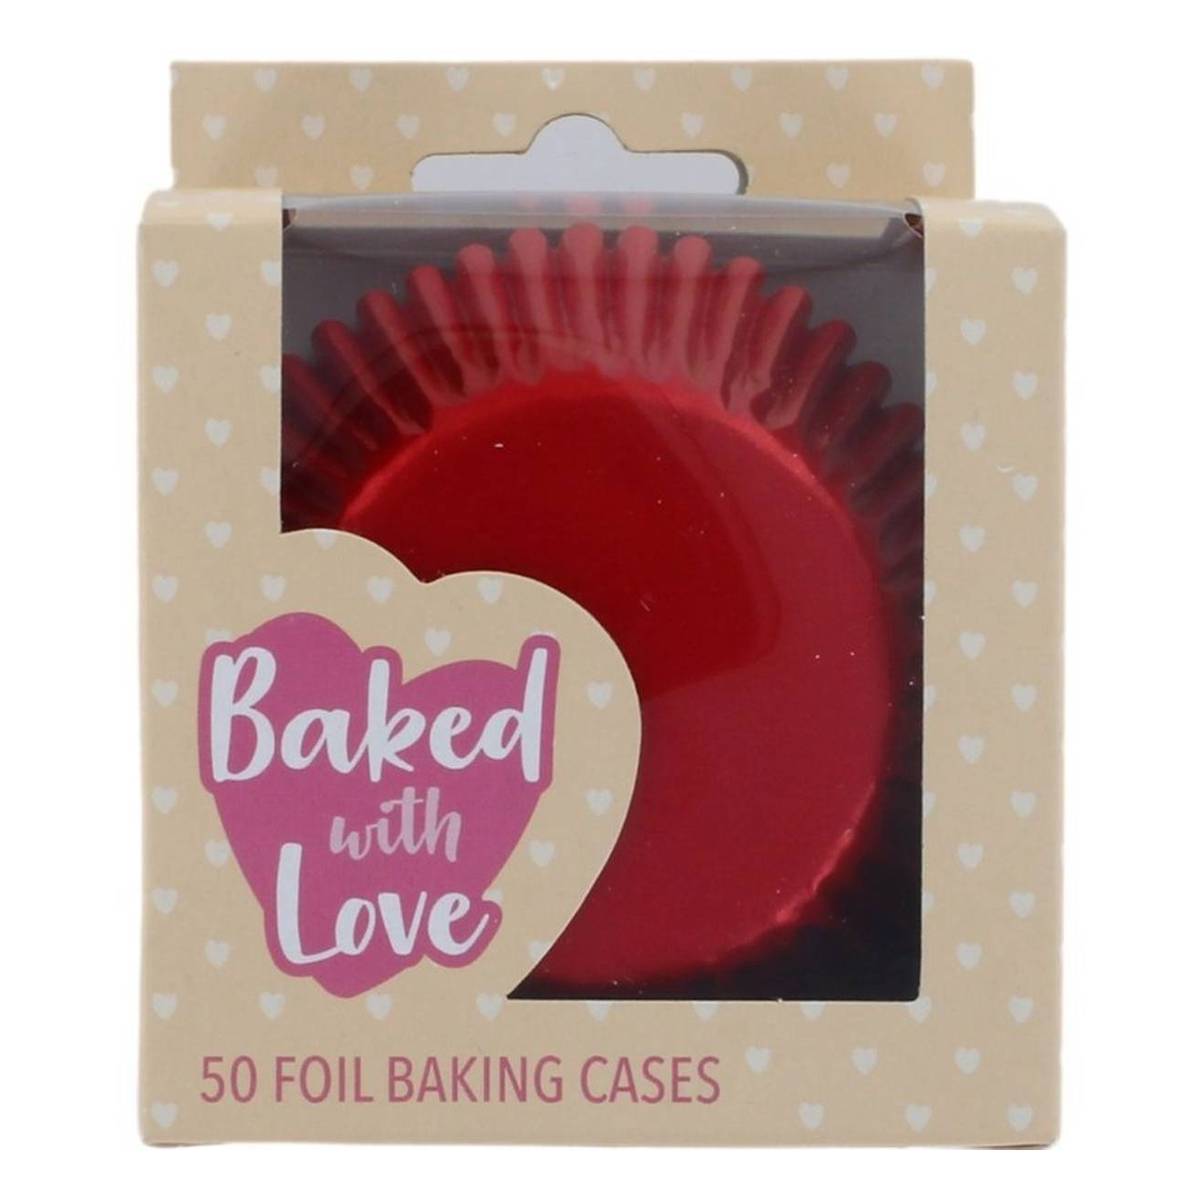 https://www.hobbycraft.co.uk/on/demandware.static/-/Sites-hobbycraft-uk-master/default/dwea694850/images/large/652410_1002_1_-baked-with-love-red-foil-cupcake-cases-50-pack.jpg